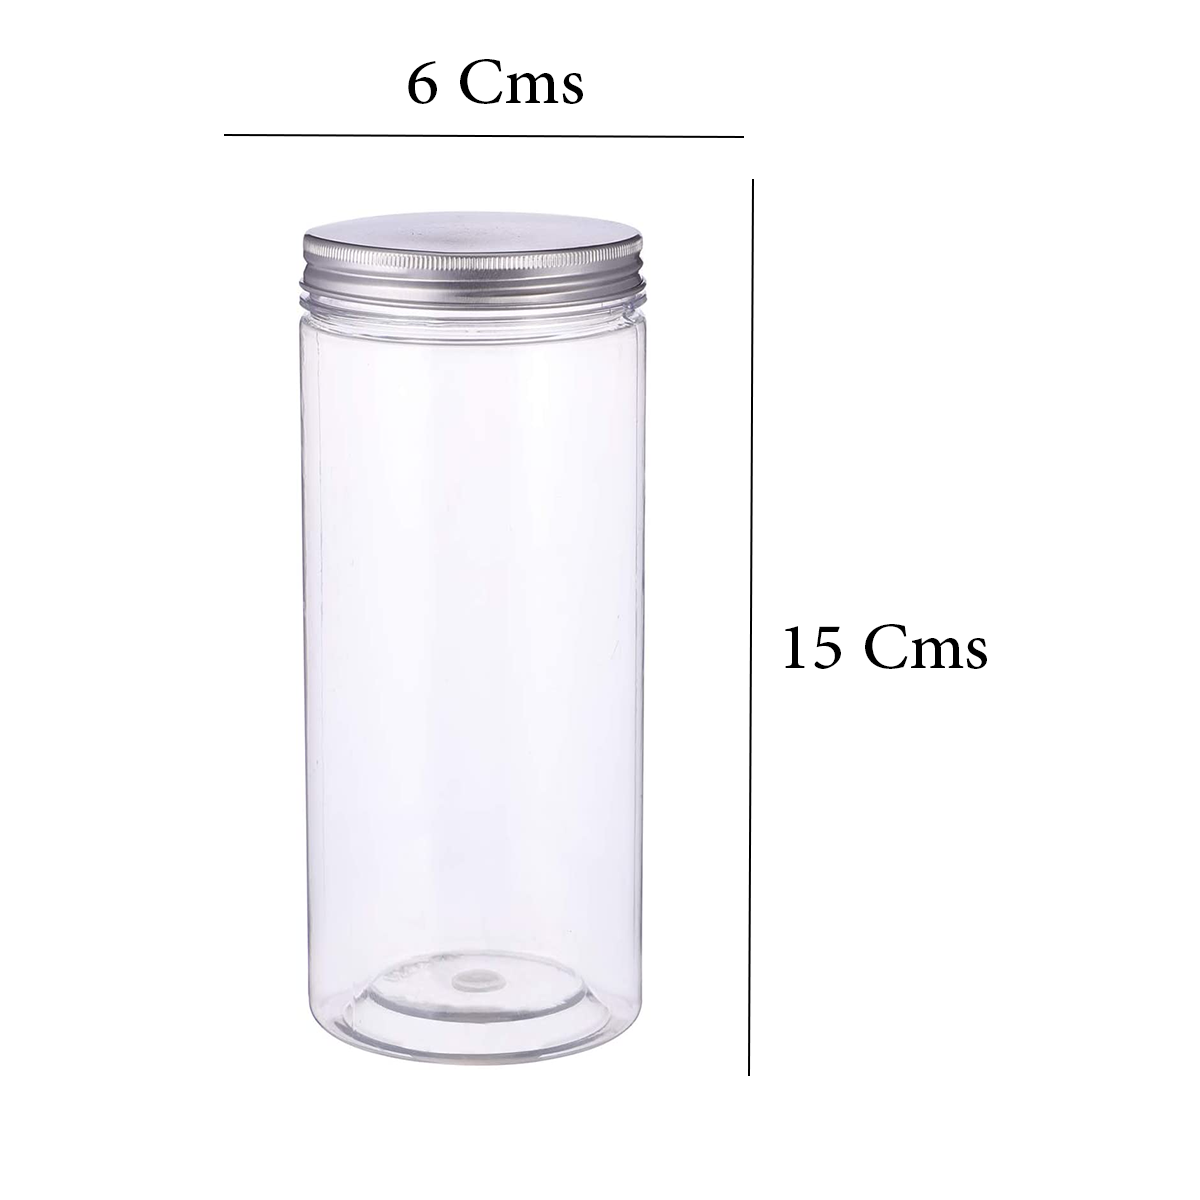 Plastic Storage Jars with Screw on Lids (15x6 Cms) 12Pcs Pack - wILLOW